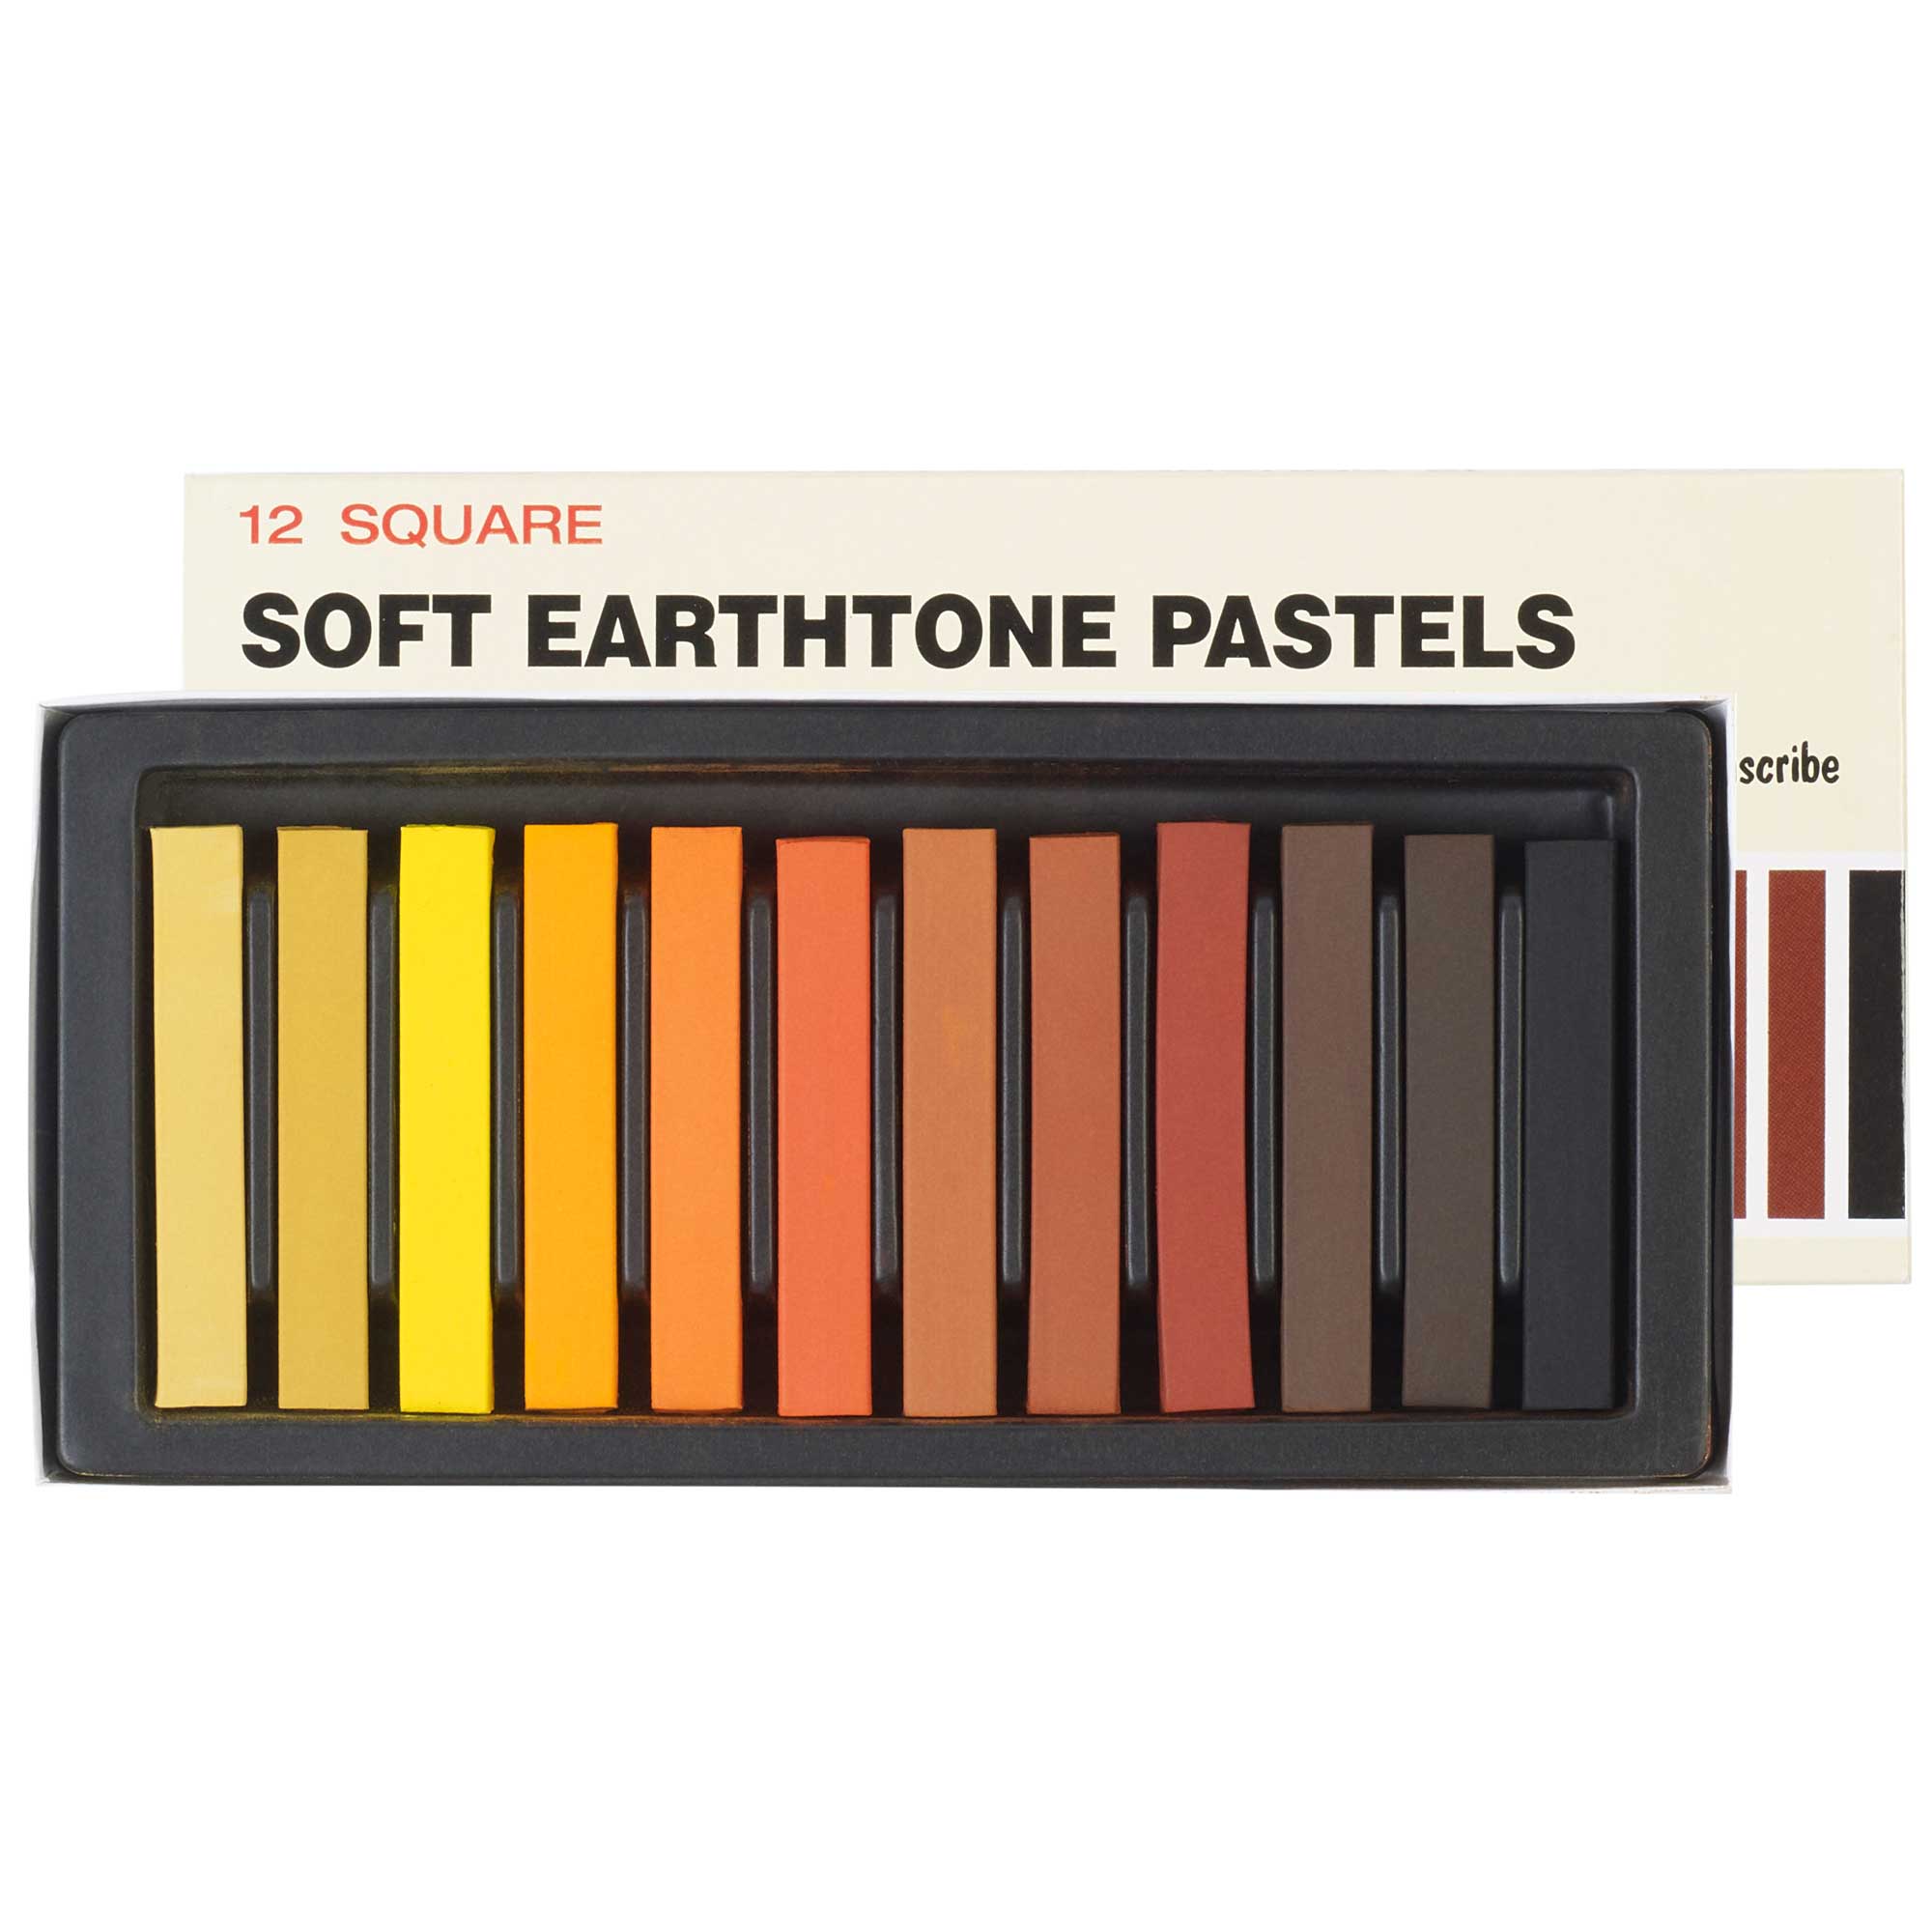 Inscribe Soft Earthtone Pastels